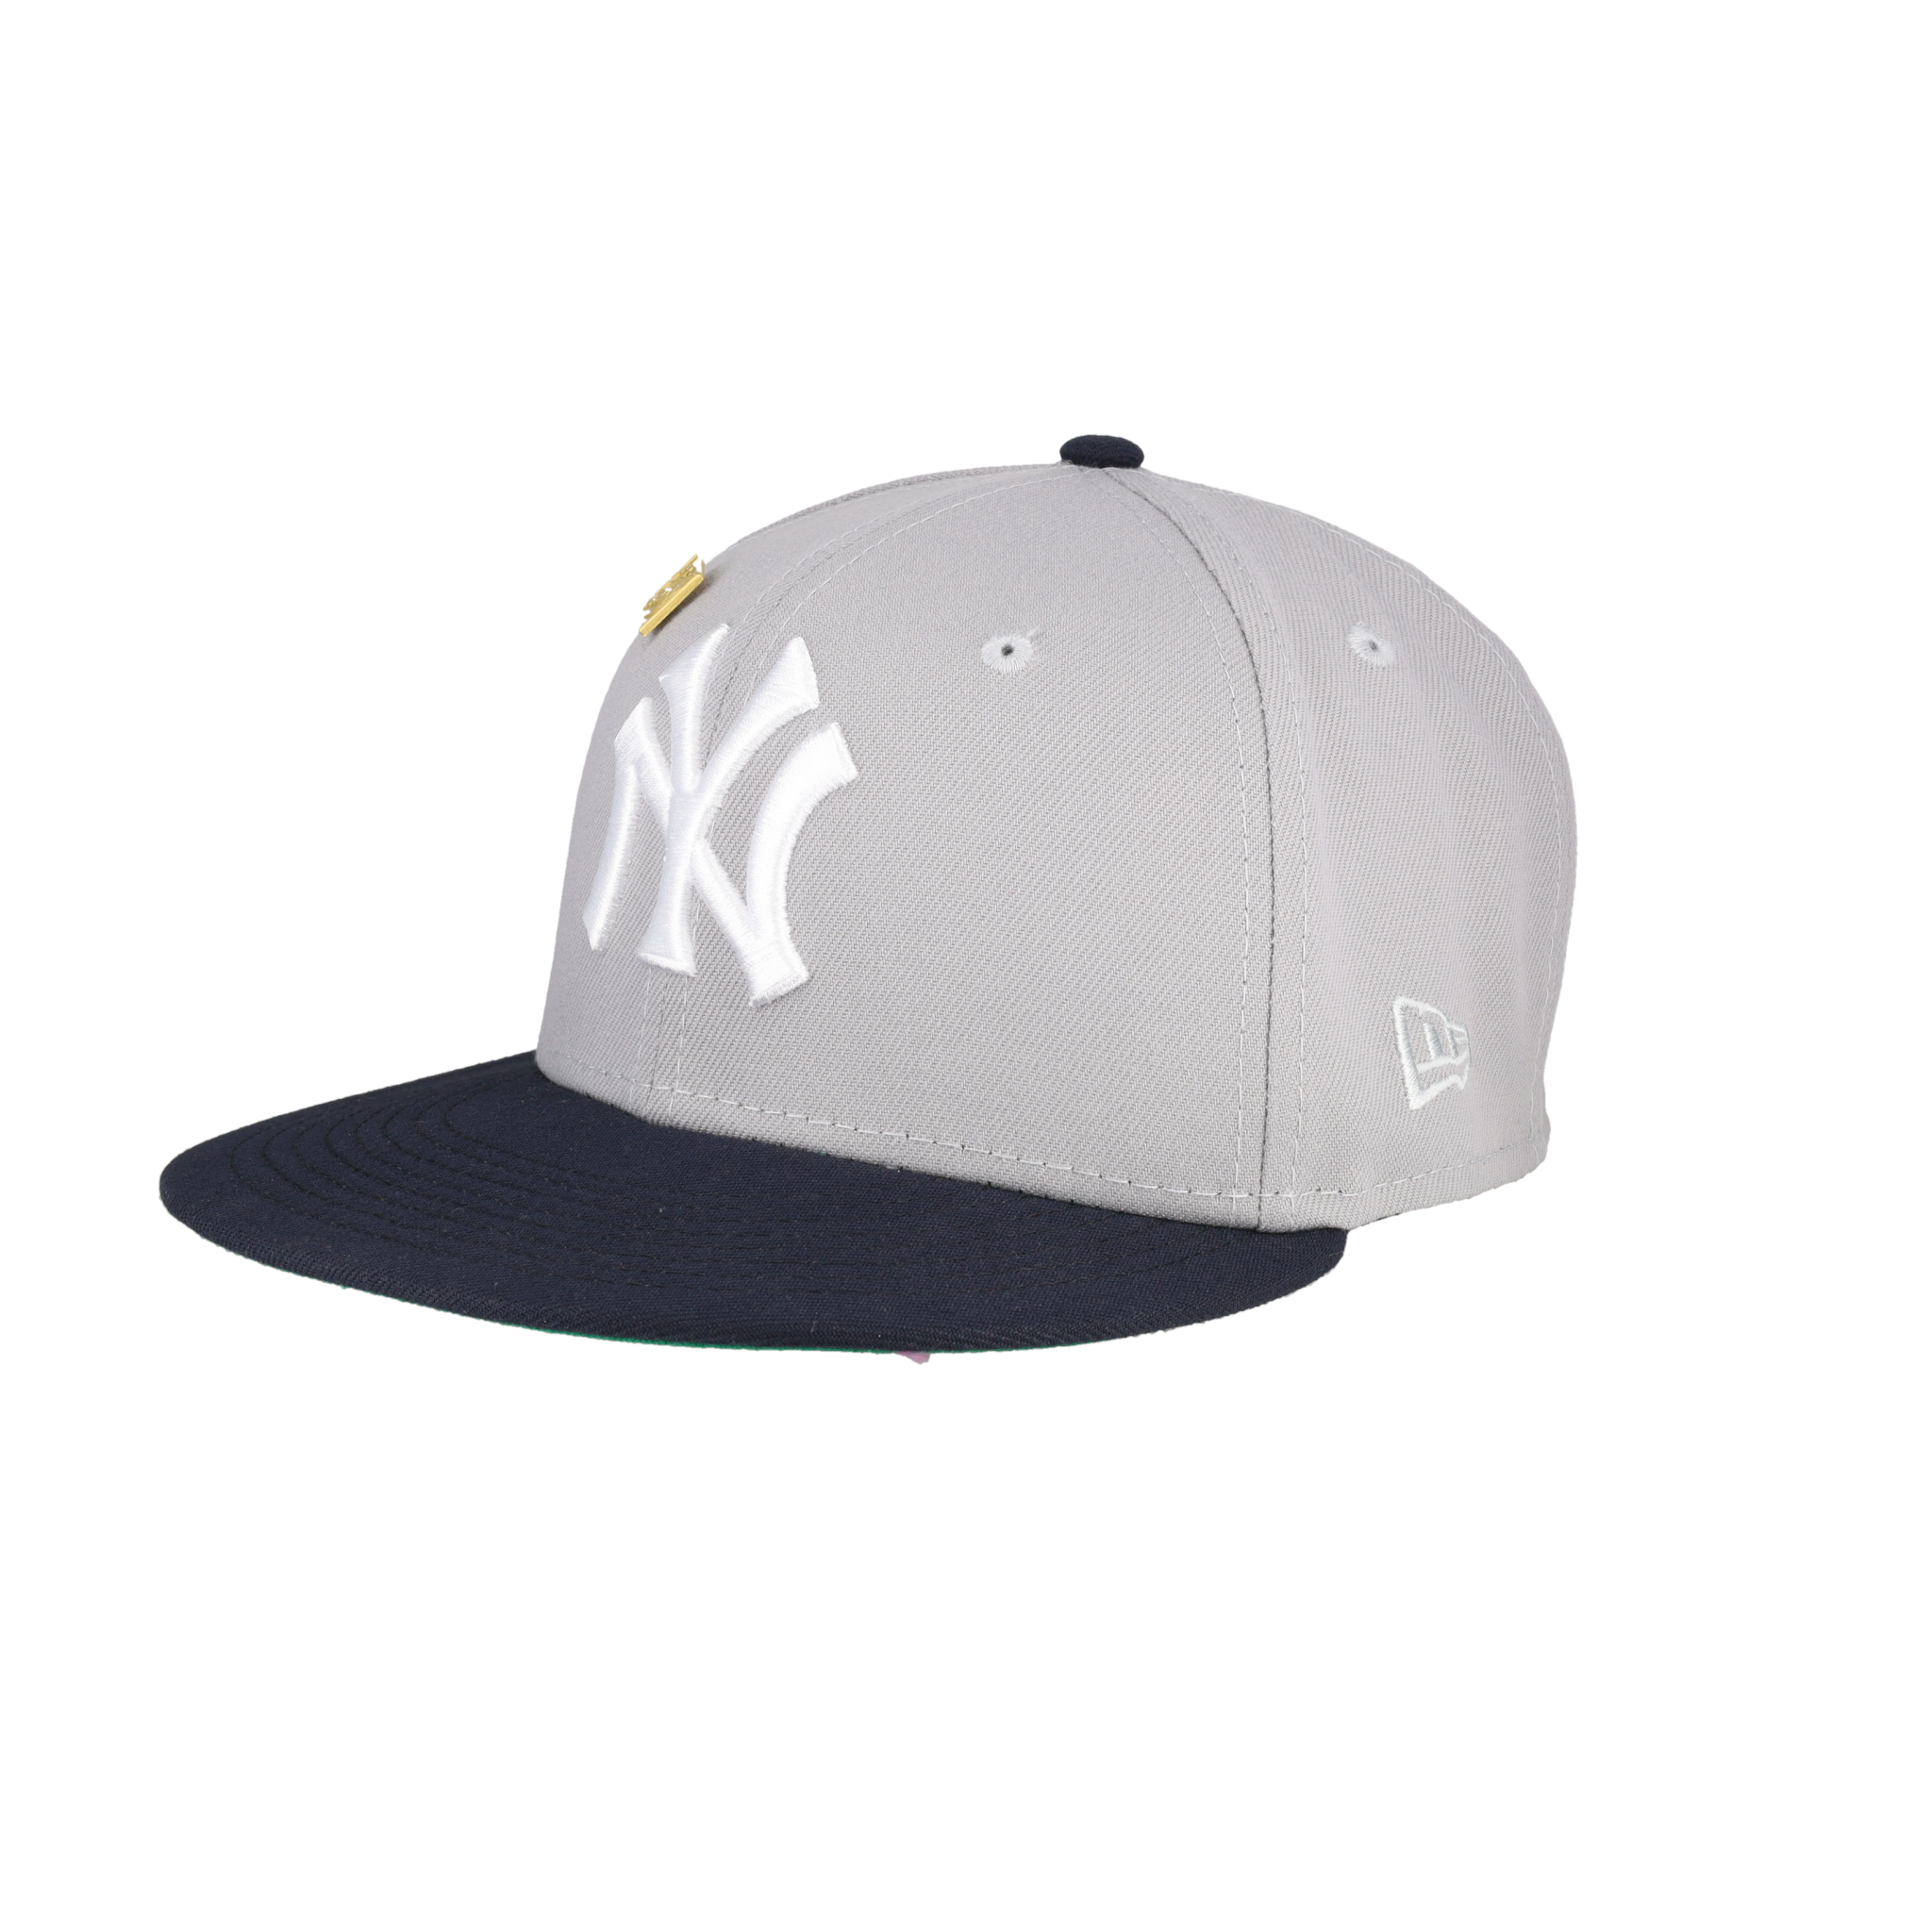 Gorra New Era New York Yankees MLB World Series Pin 59FIFTY Fitted New Era